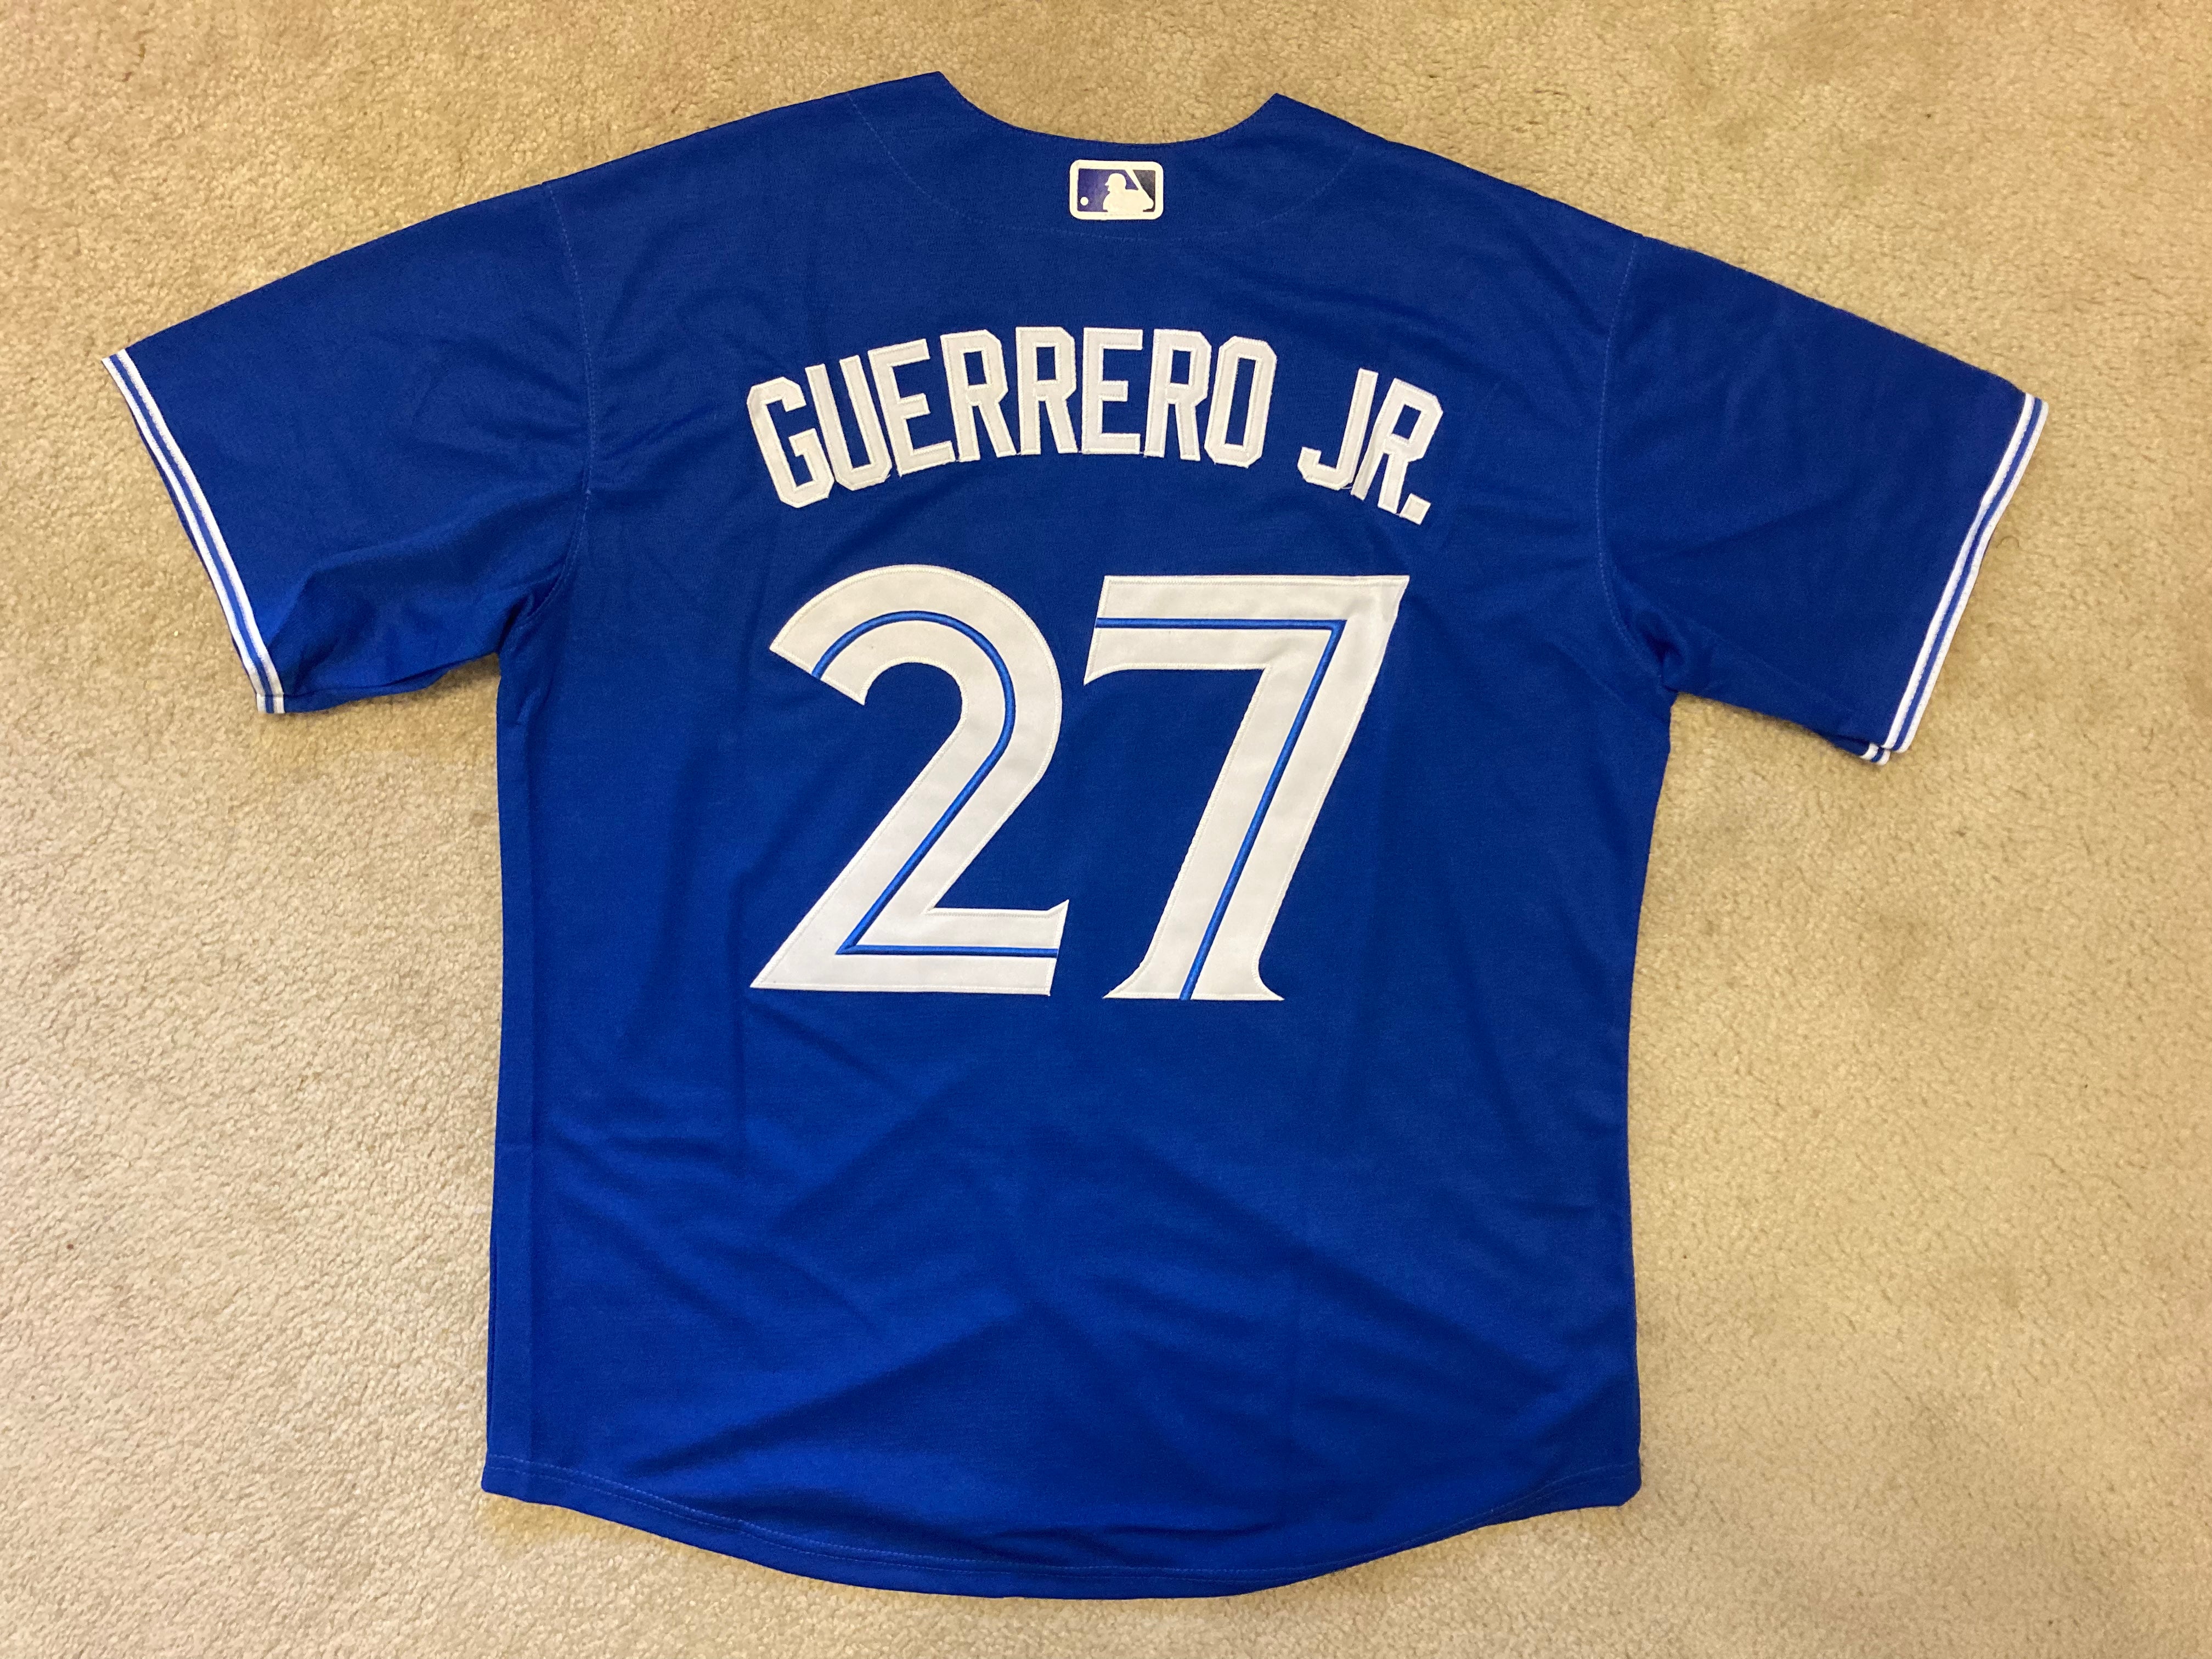 NEW - Mens Stitched Nike MLB Jersey - Vladimir Guerrero Jr. - Blue Jays -  XL